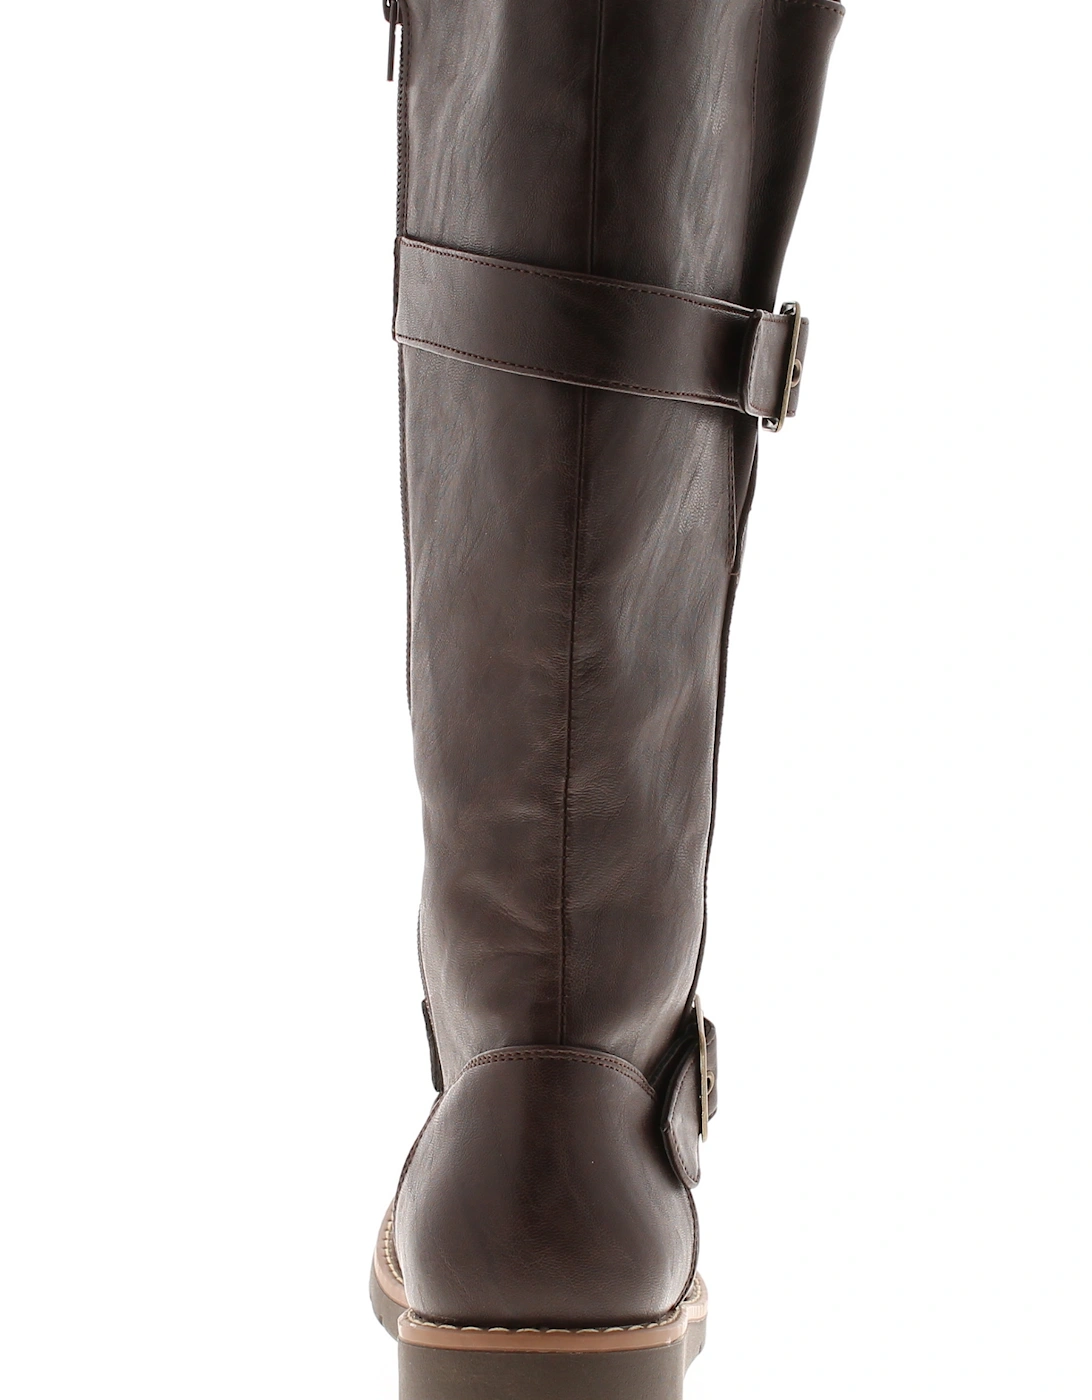 Womens Long Boots Weft Zip brown UK Size